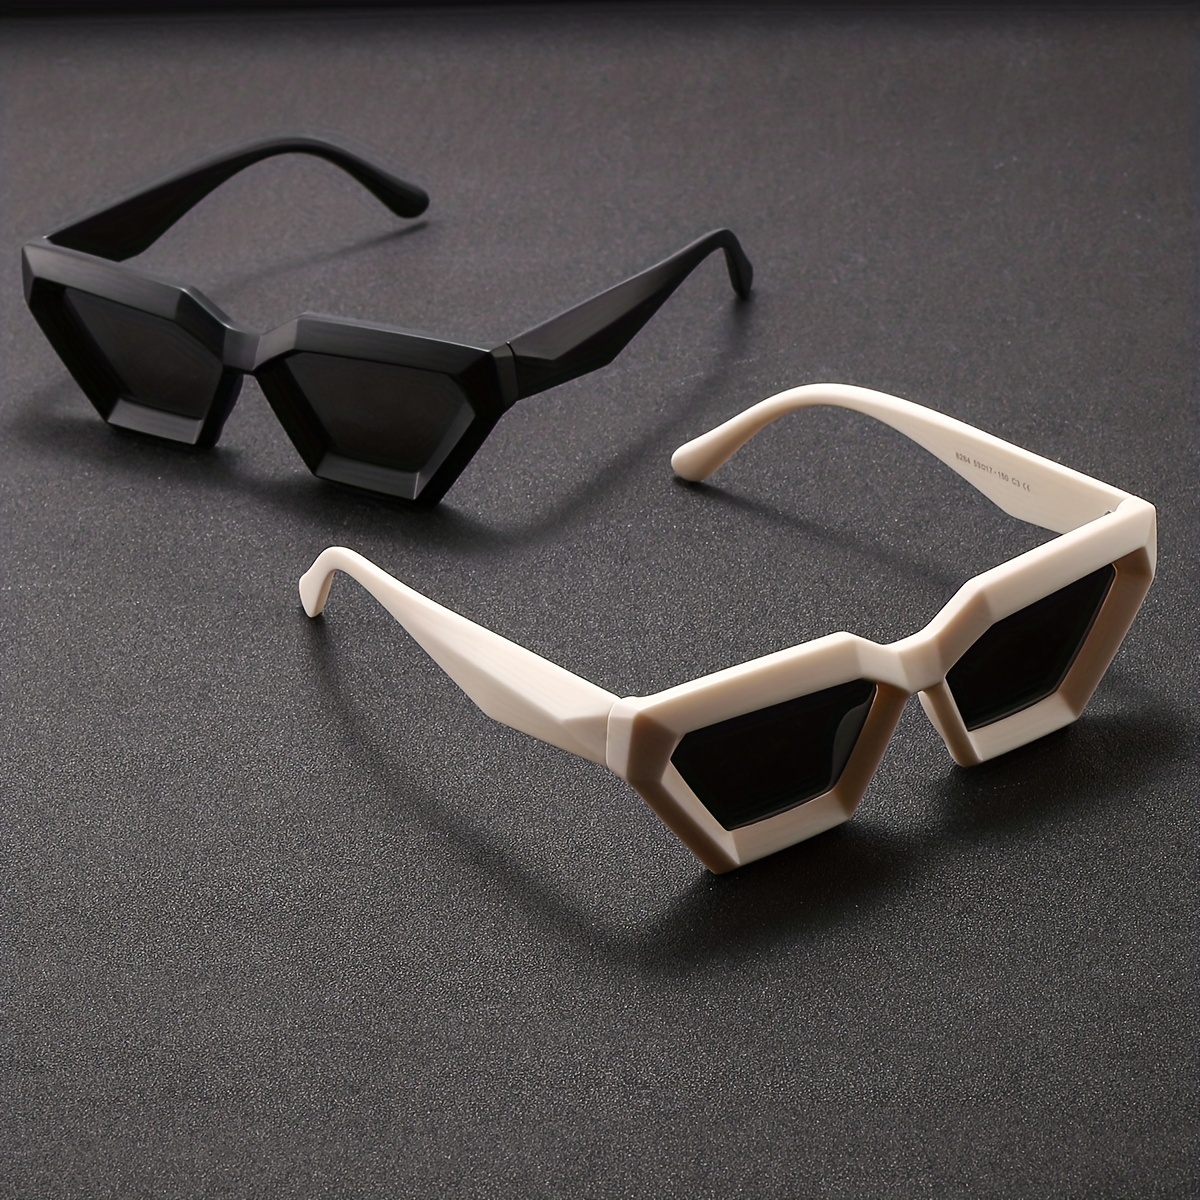 

2pairs Men's Fashion Polygon Frame Fashion Glasses, Couple Fashion Glasses, Cool Handsome Futuristic Sense Fashion Glasses, Ideal Choice For Gifts